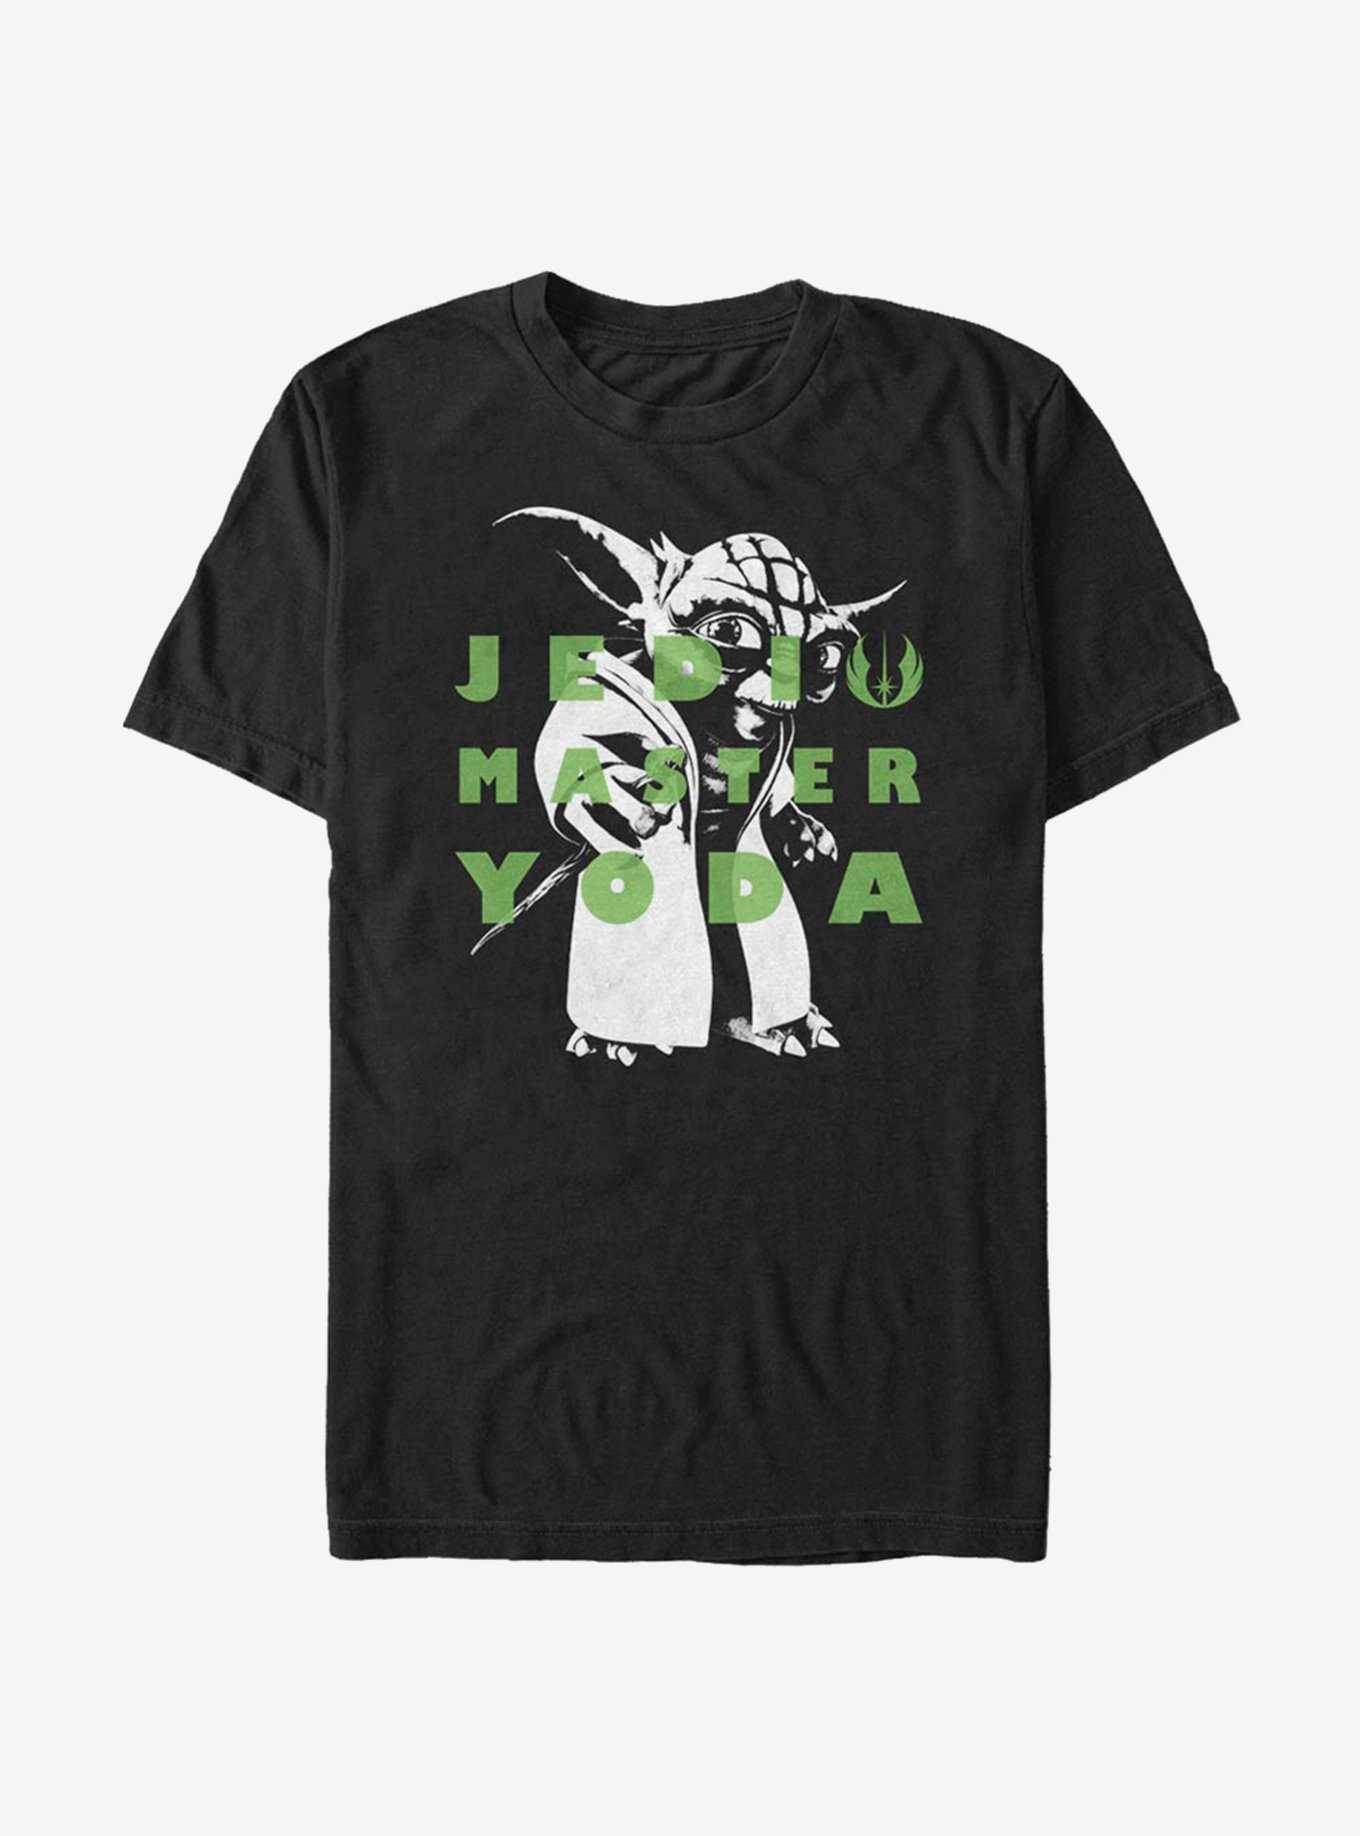 Star Wars The Clone Wars Yoda Text T-Shirt, , hi-res